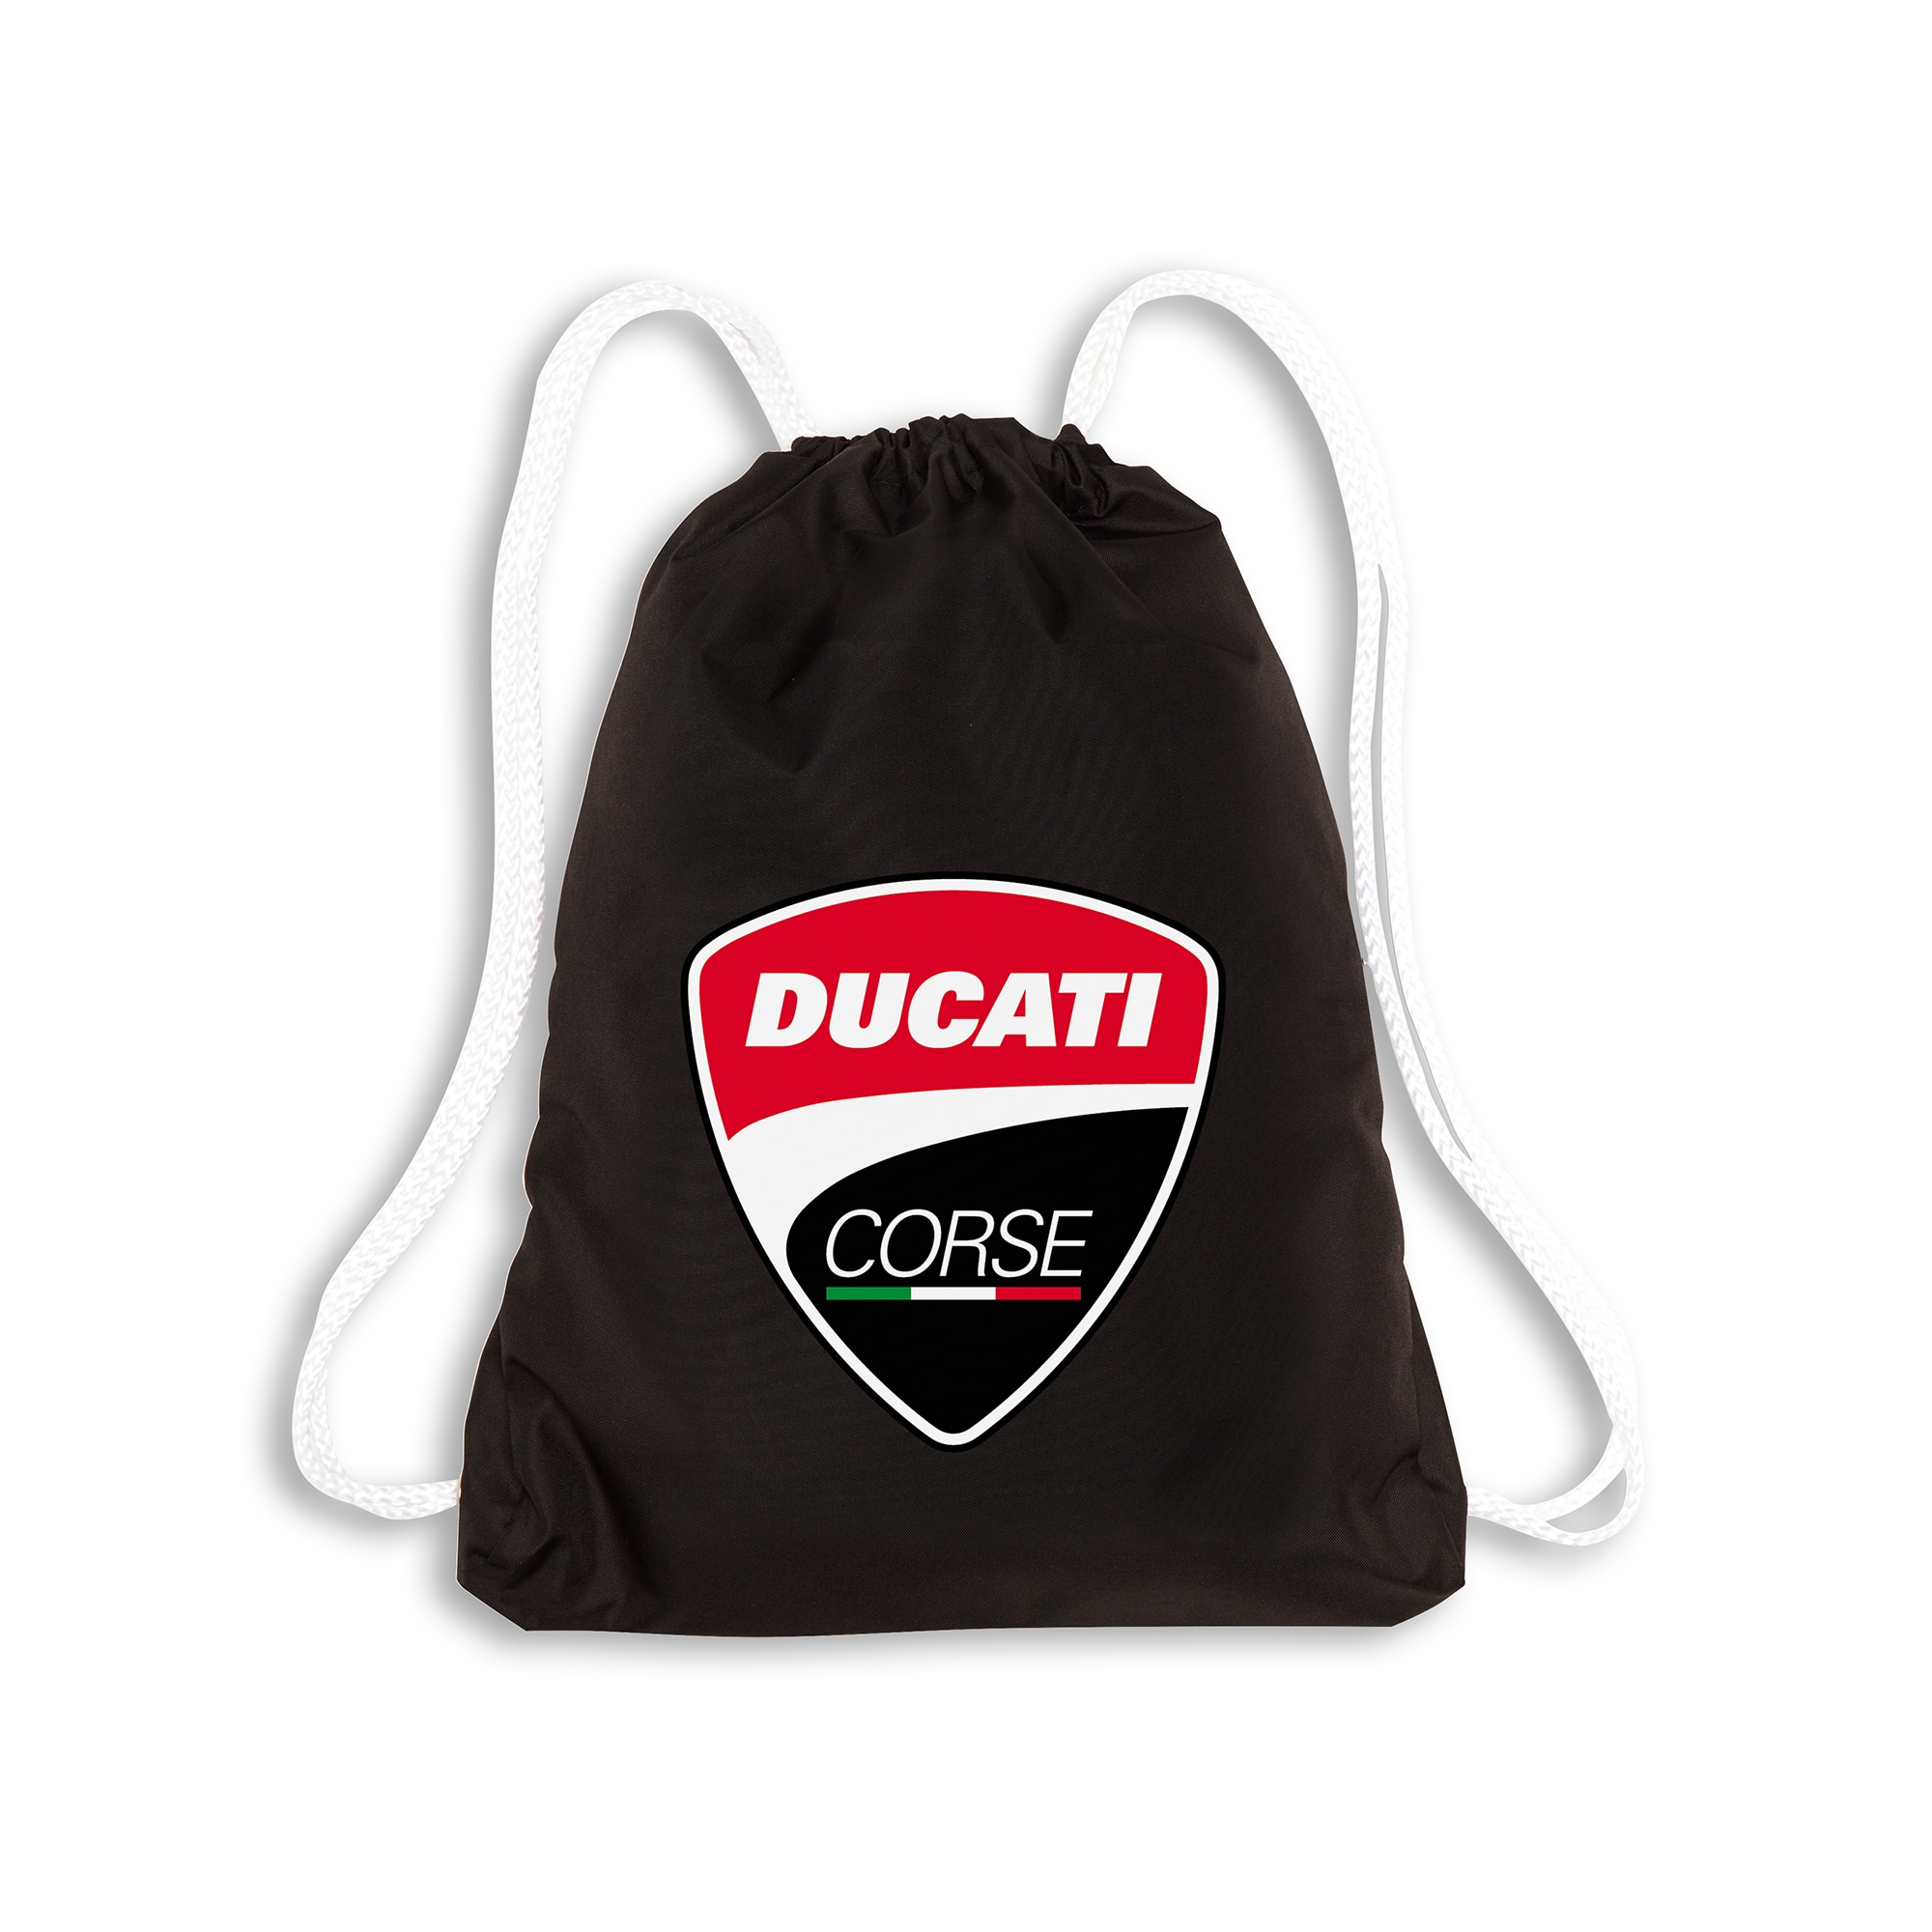 Ducati Corse - Backpack